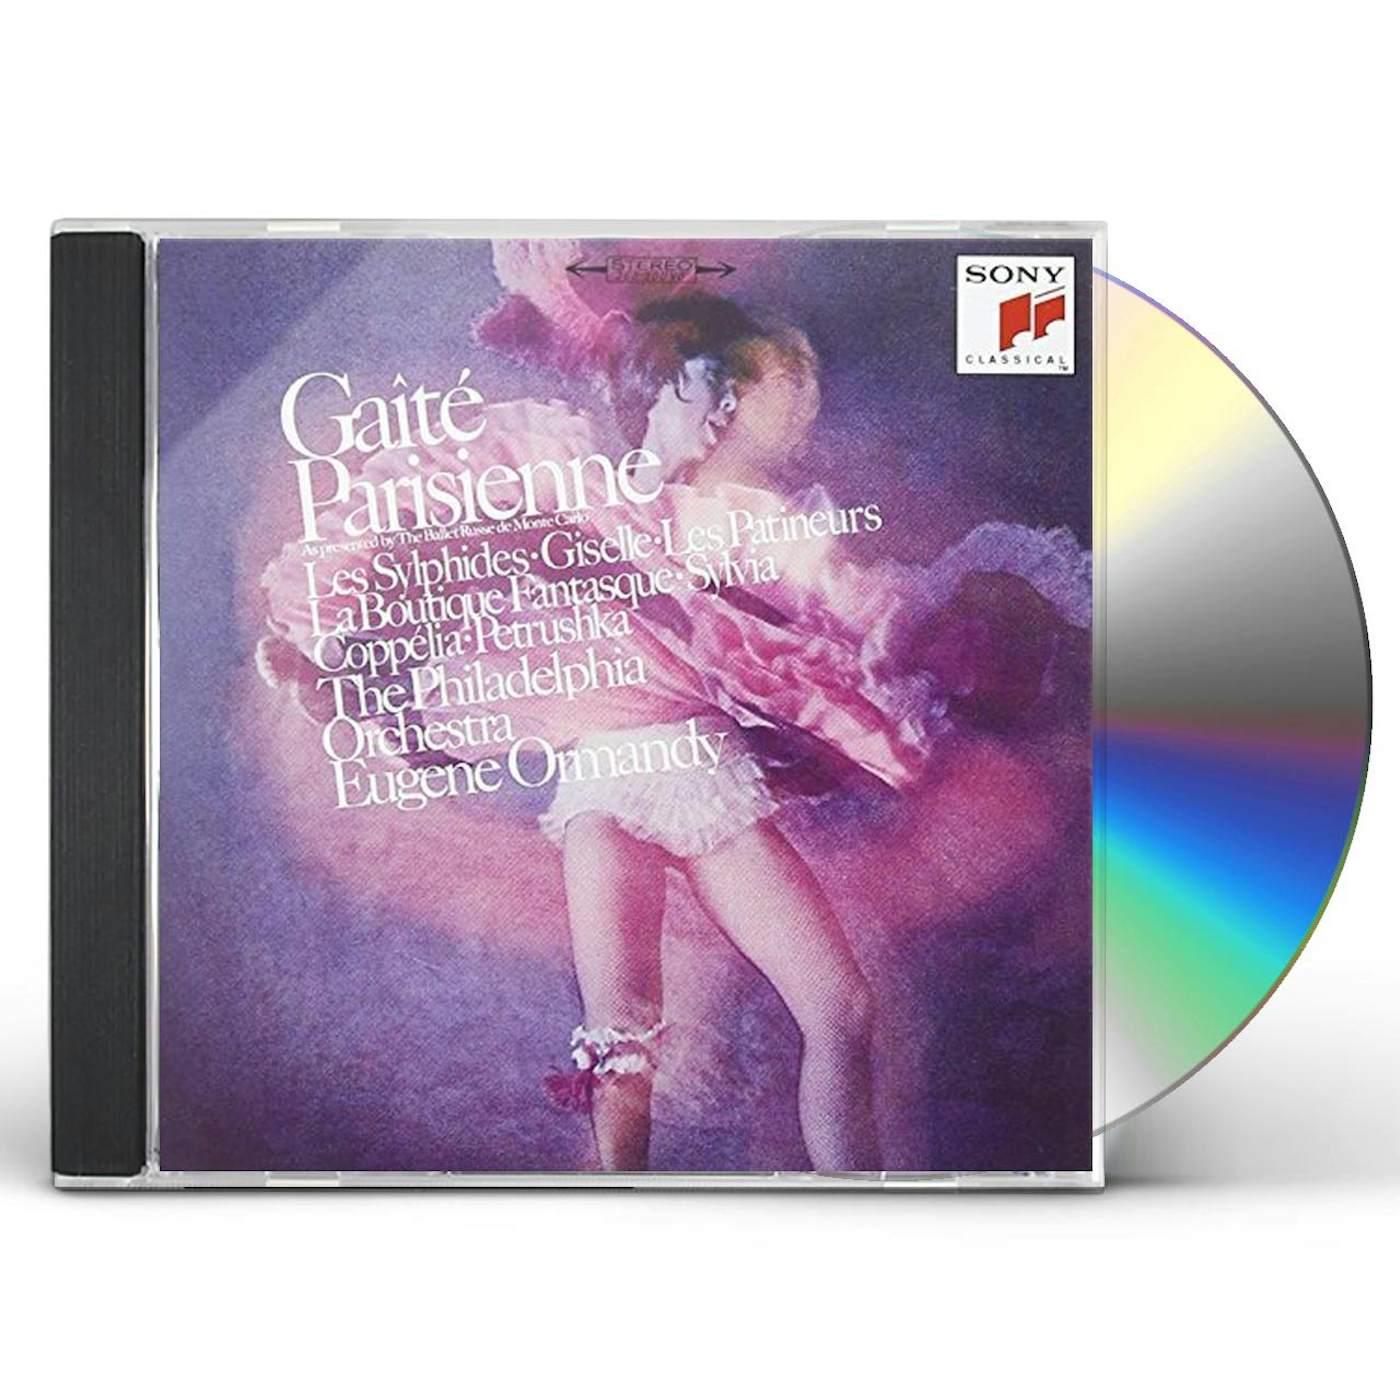 Eugene Ormandy BALLET MASTERPIECES CD